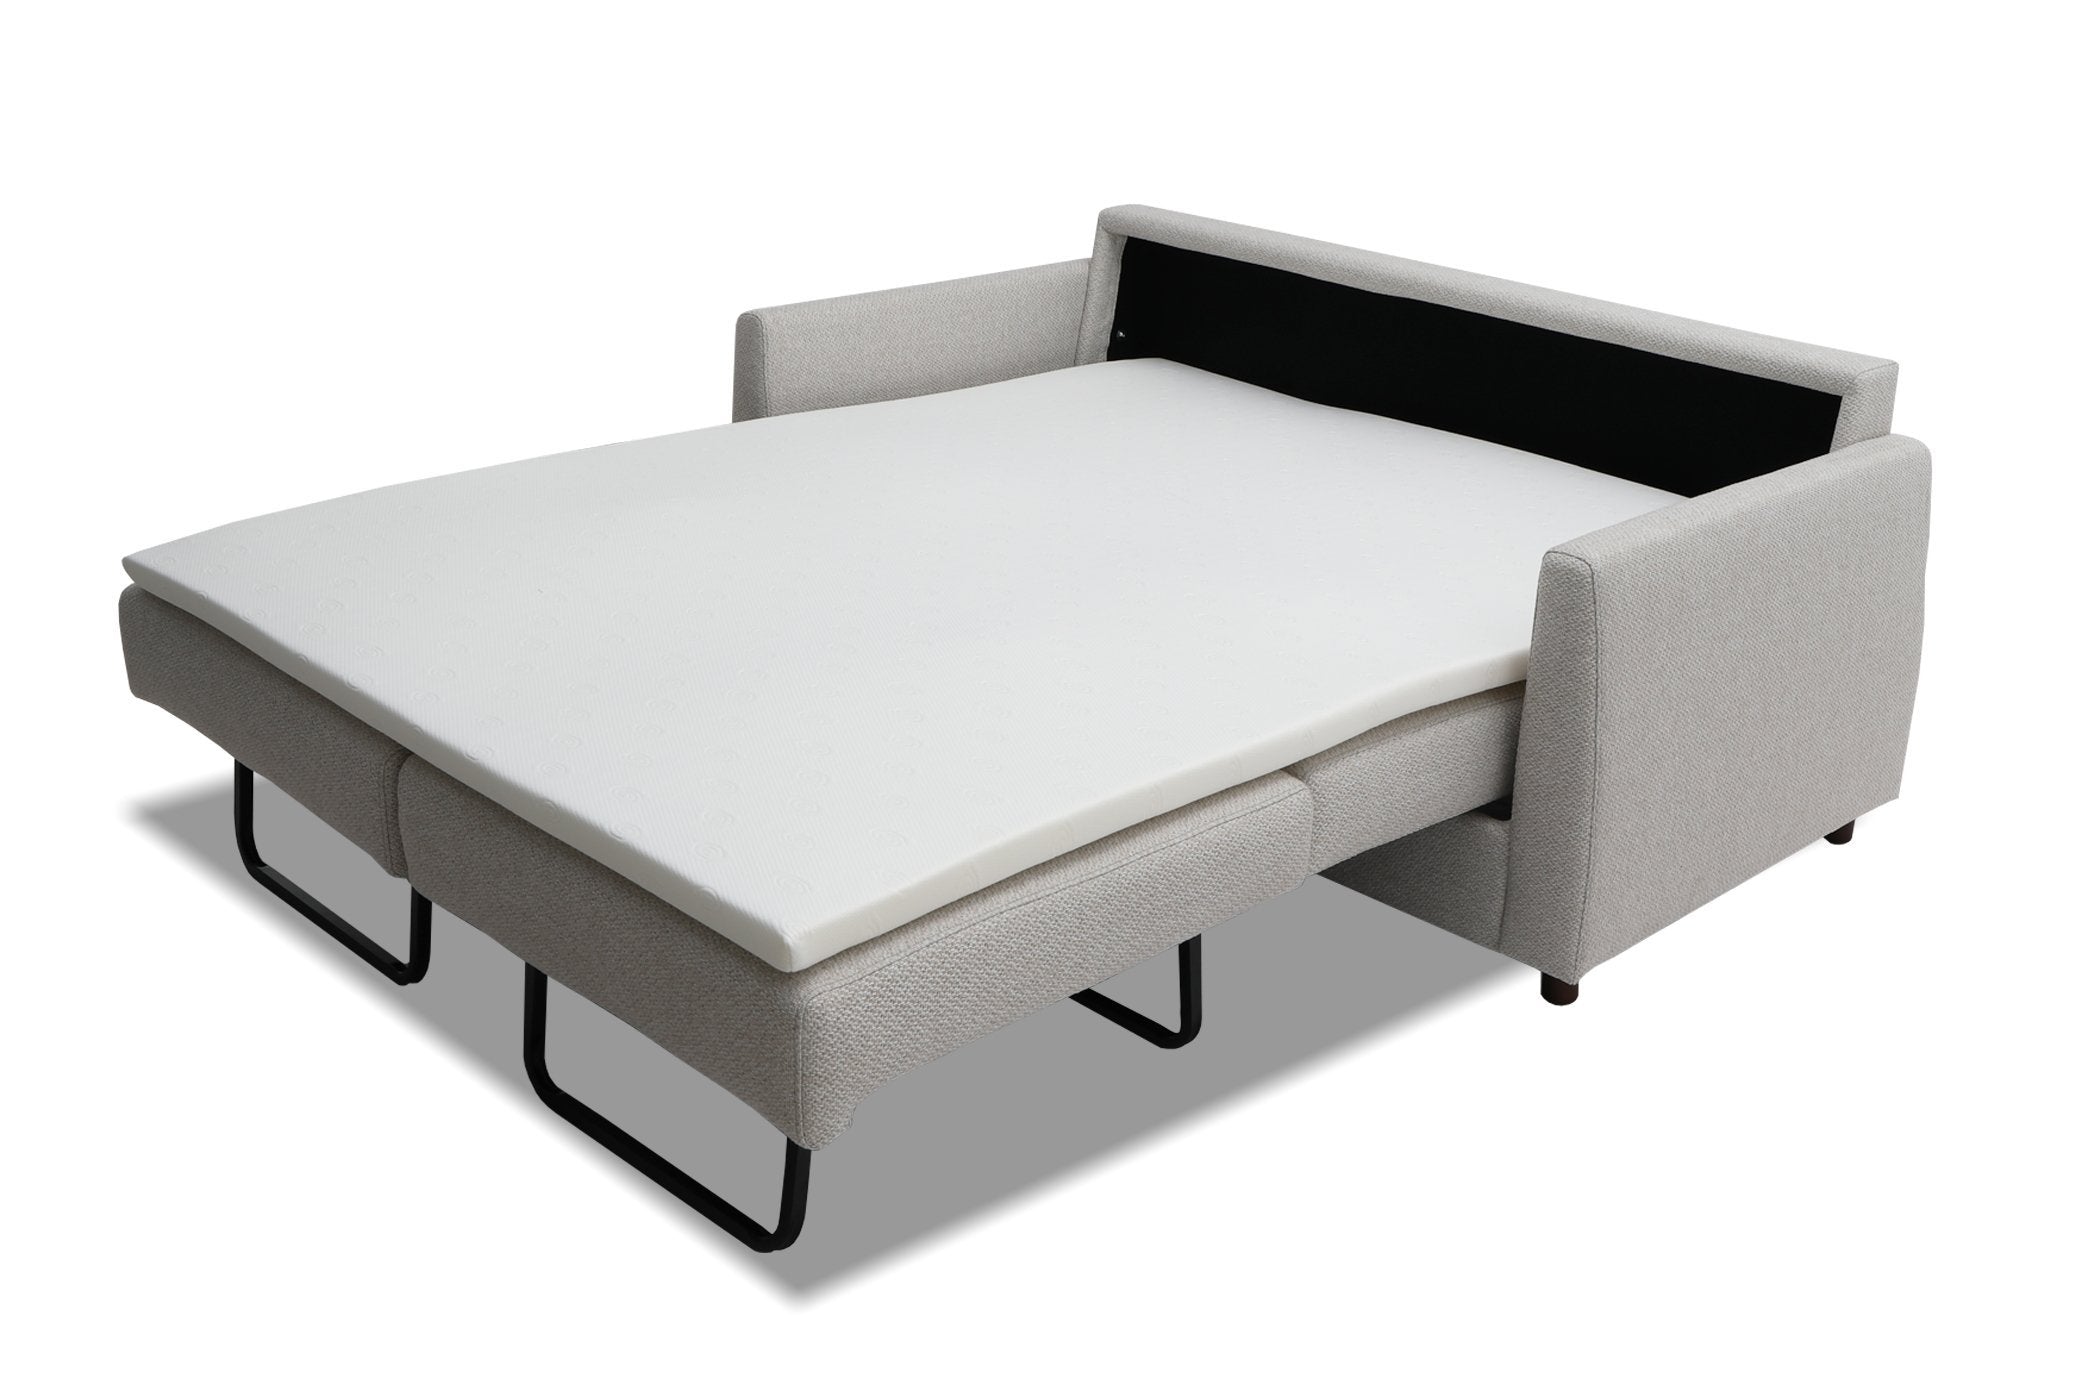 Memory Foam Mattress Topper For Sofa Sleepers